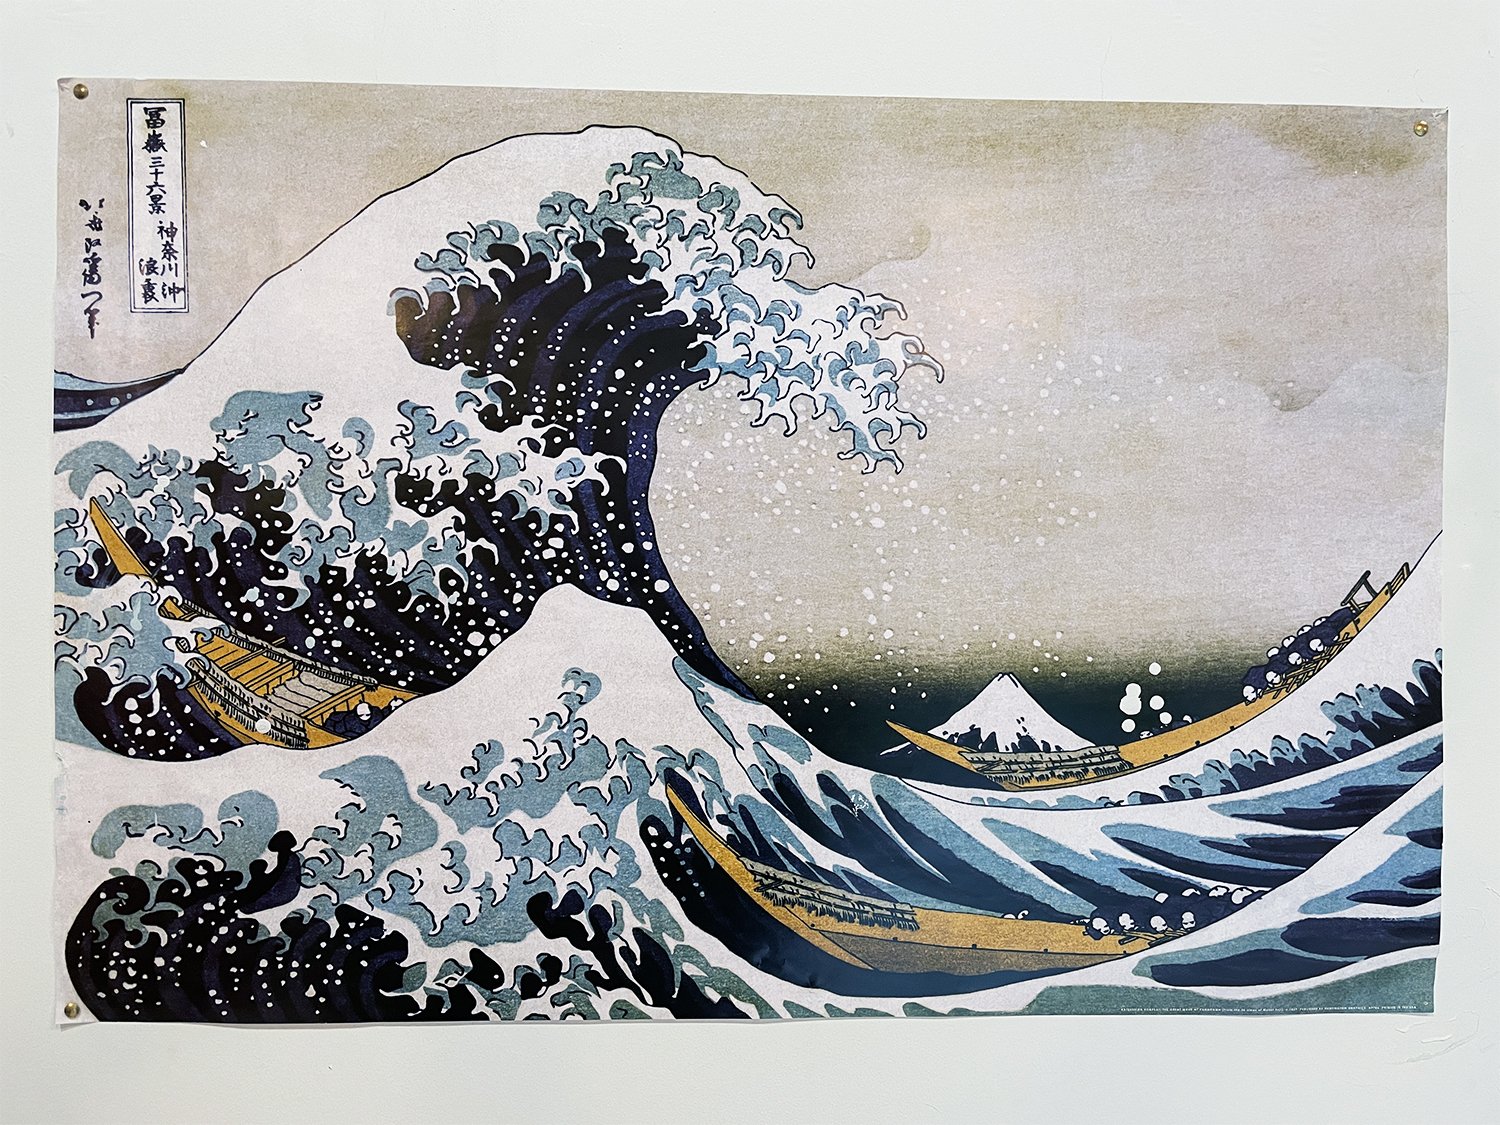 4_original inspiration %22The Great Wave Off of Kanagawa%22, By Hokusai copy.jpg